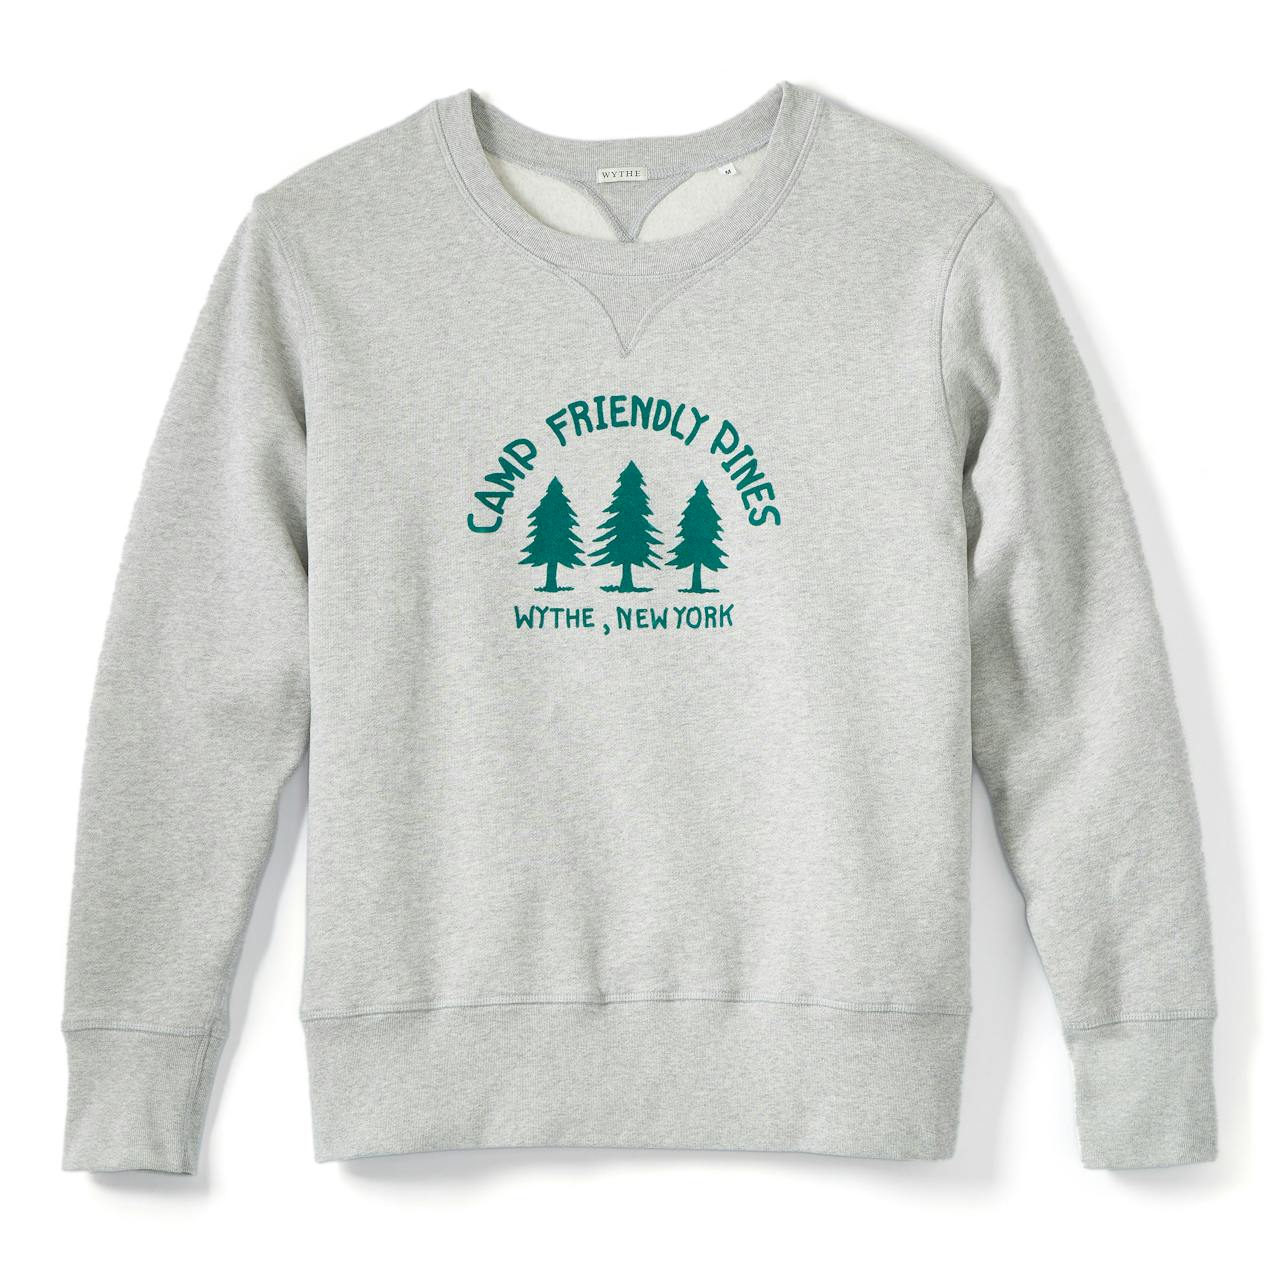 Wythe New York Camp Friendly Pines Flocked Sweatshirt